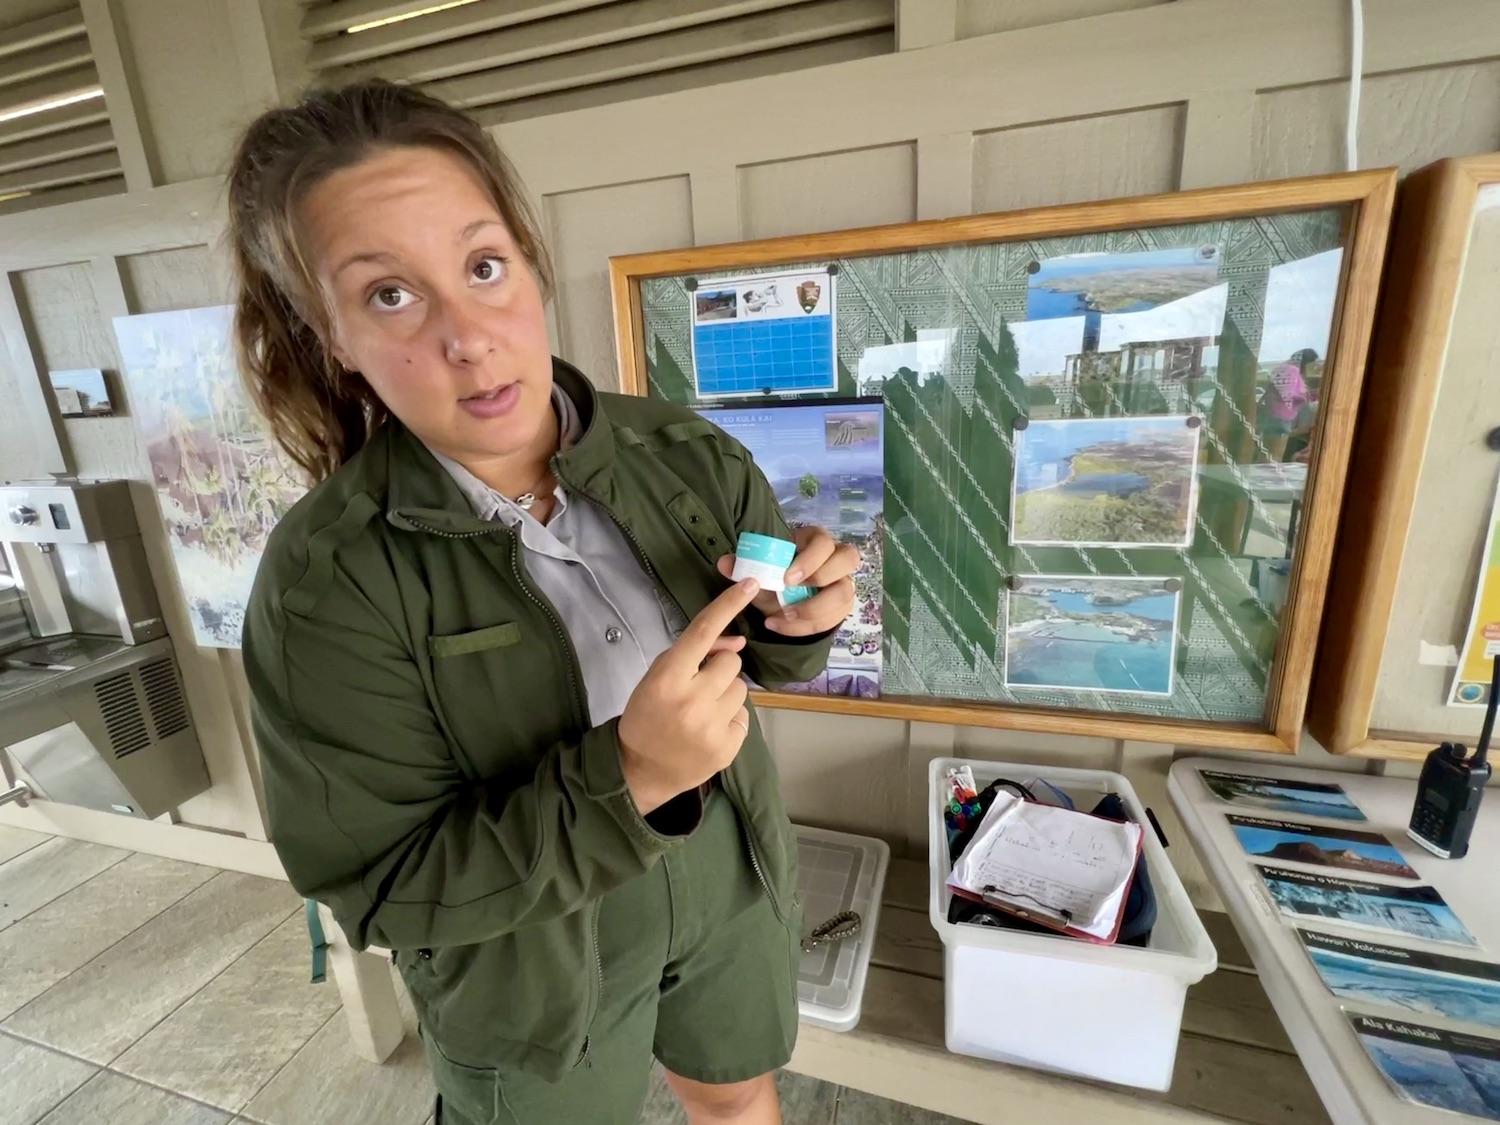 Ranger Emily Bankston shows a sample of reef-safe mineral sunscreen at Kaloko-Honokōhau National Historical Park.